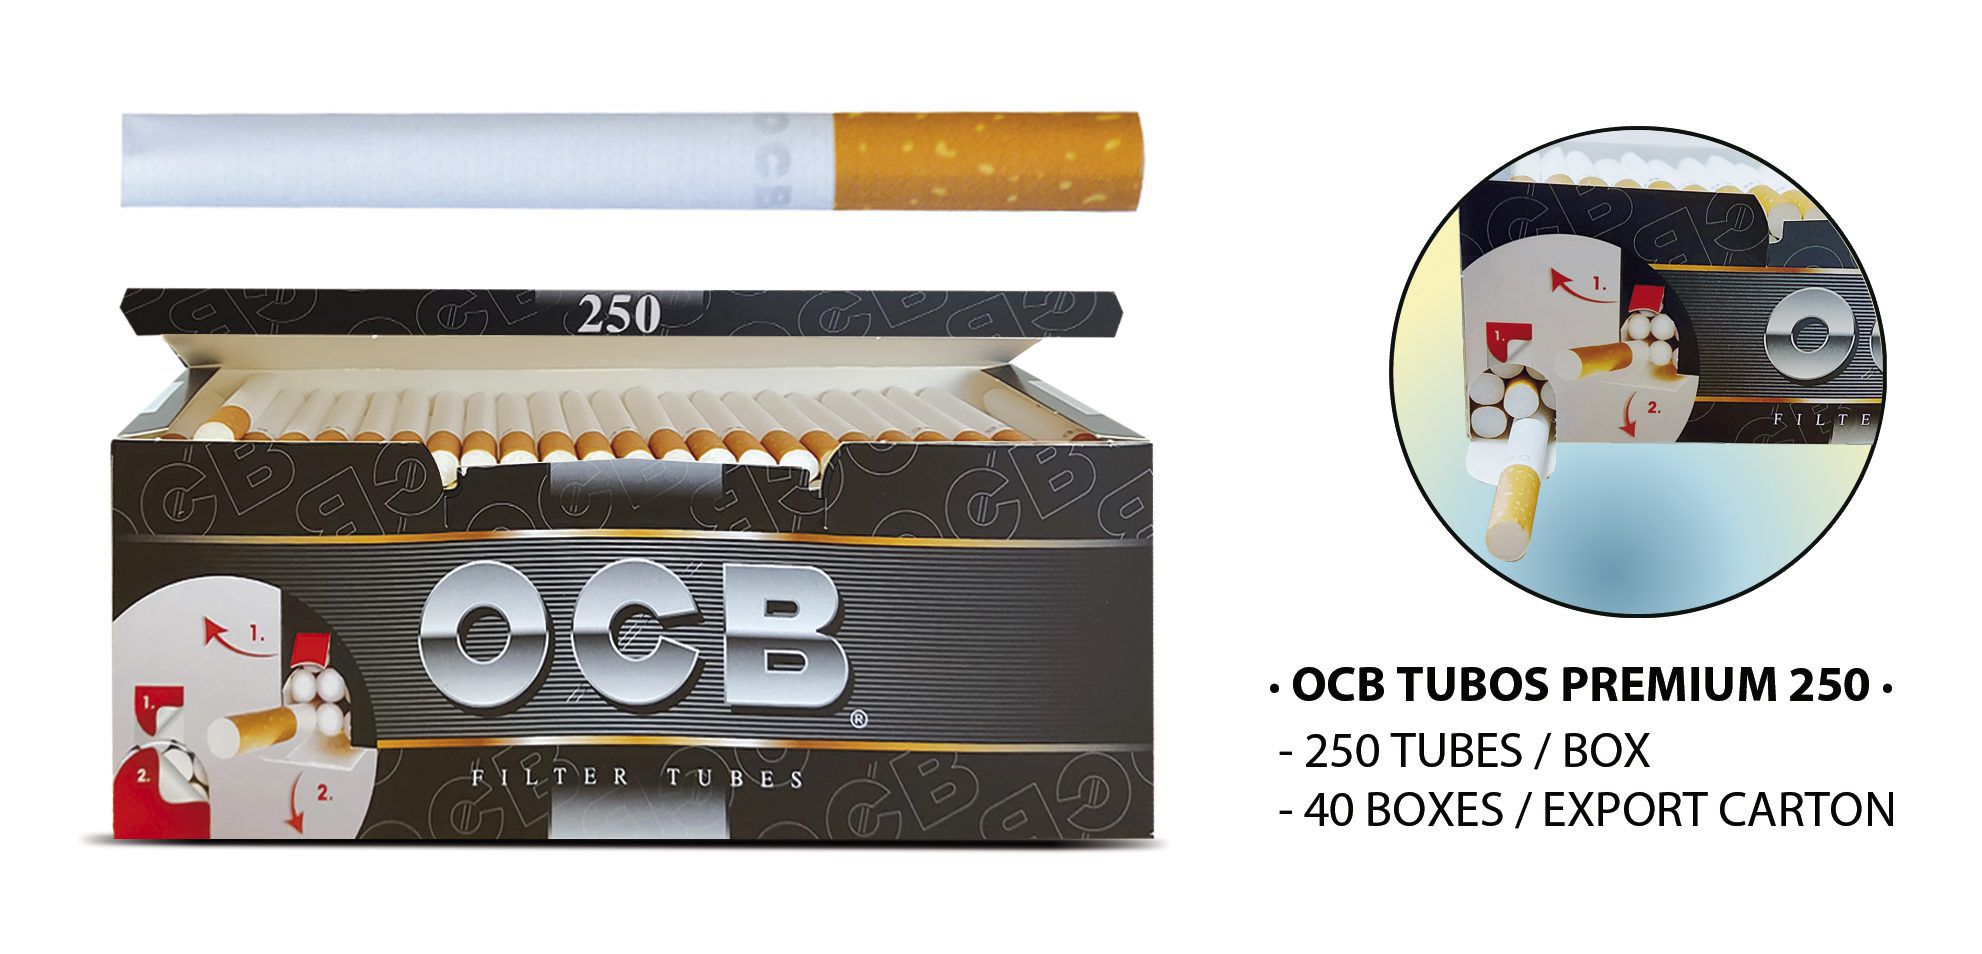 OCB TUBOS PREMIUM 250 en PAPER MAKERS & TRADERS, S.L. - OCB